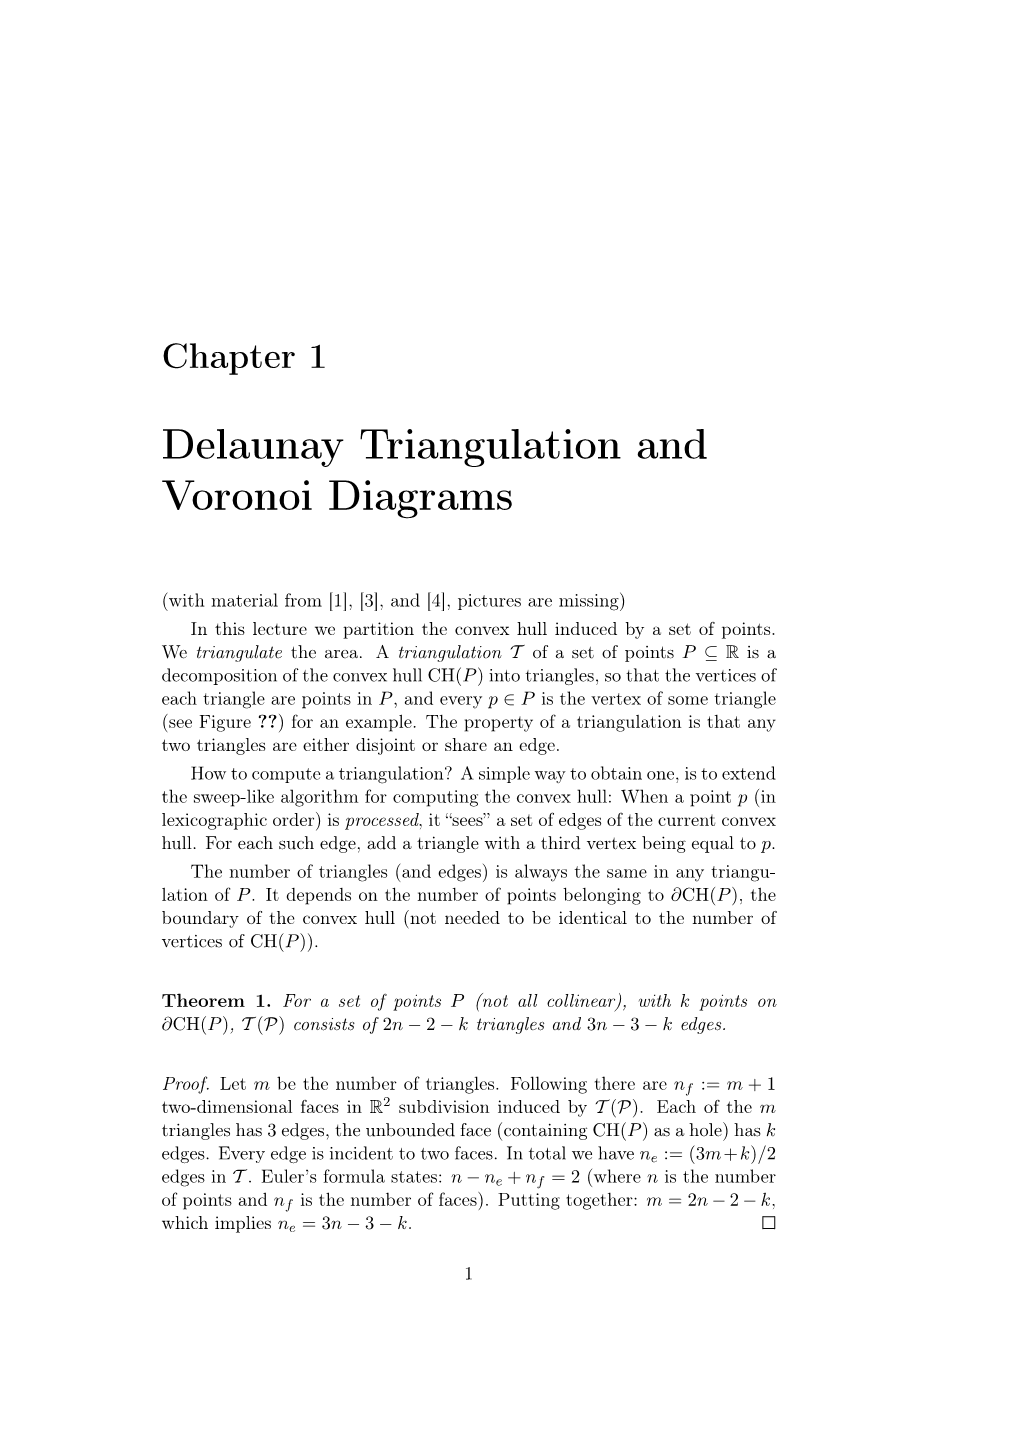 Delaunay Triangulation and Voronoi Diagrams